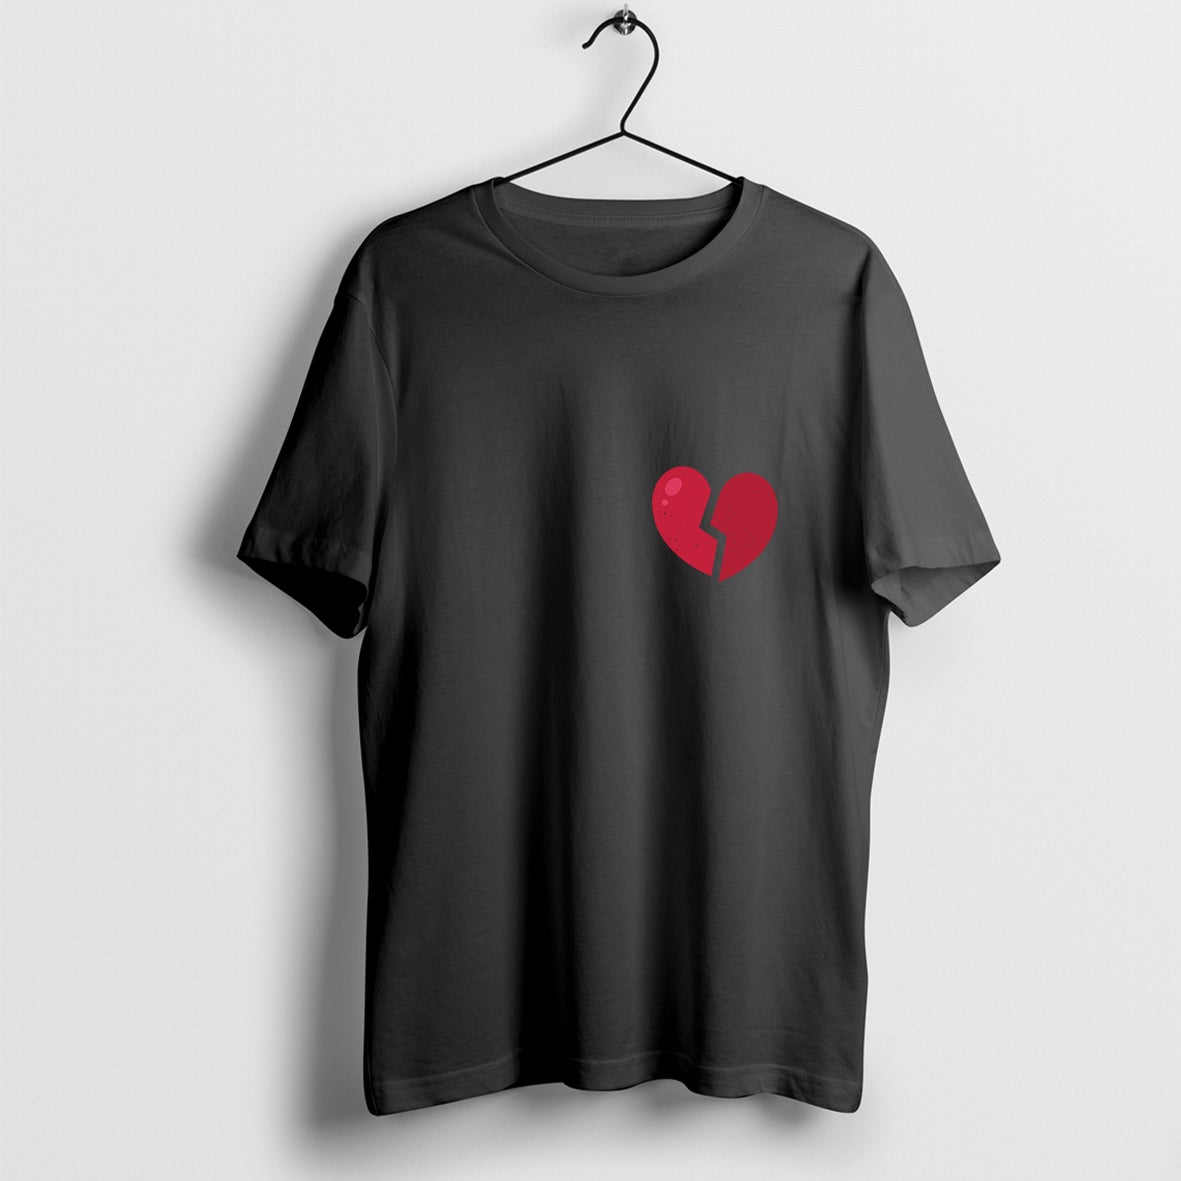 Broken Heart T-Shirt, Distressed Heart Pullover, Divorce Shirt, Funny Single Valentines Day Shirt